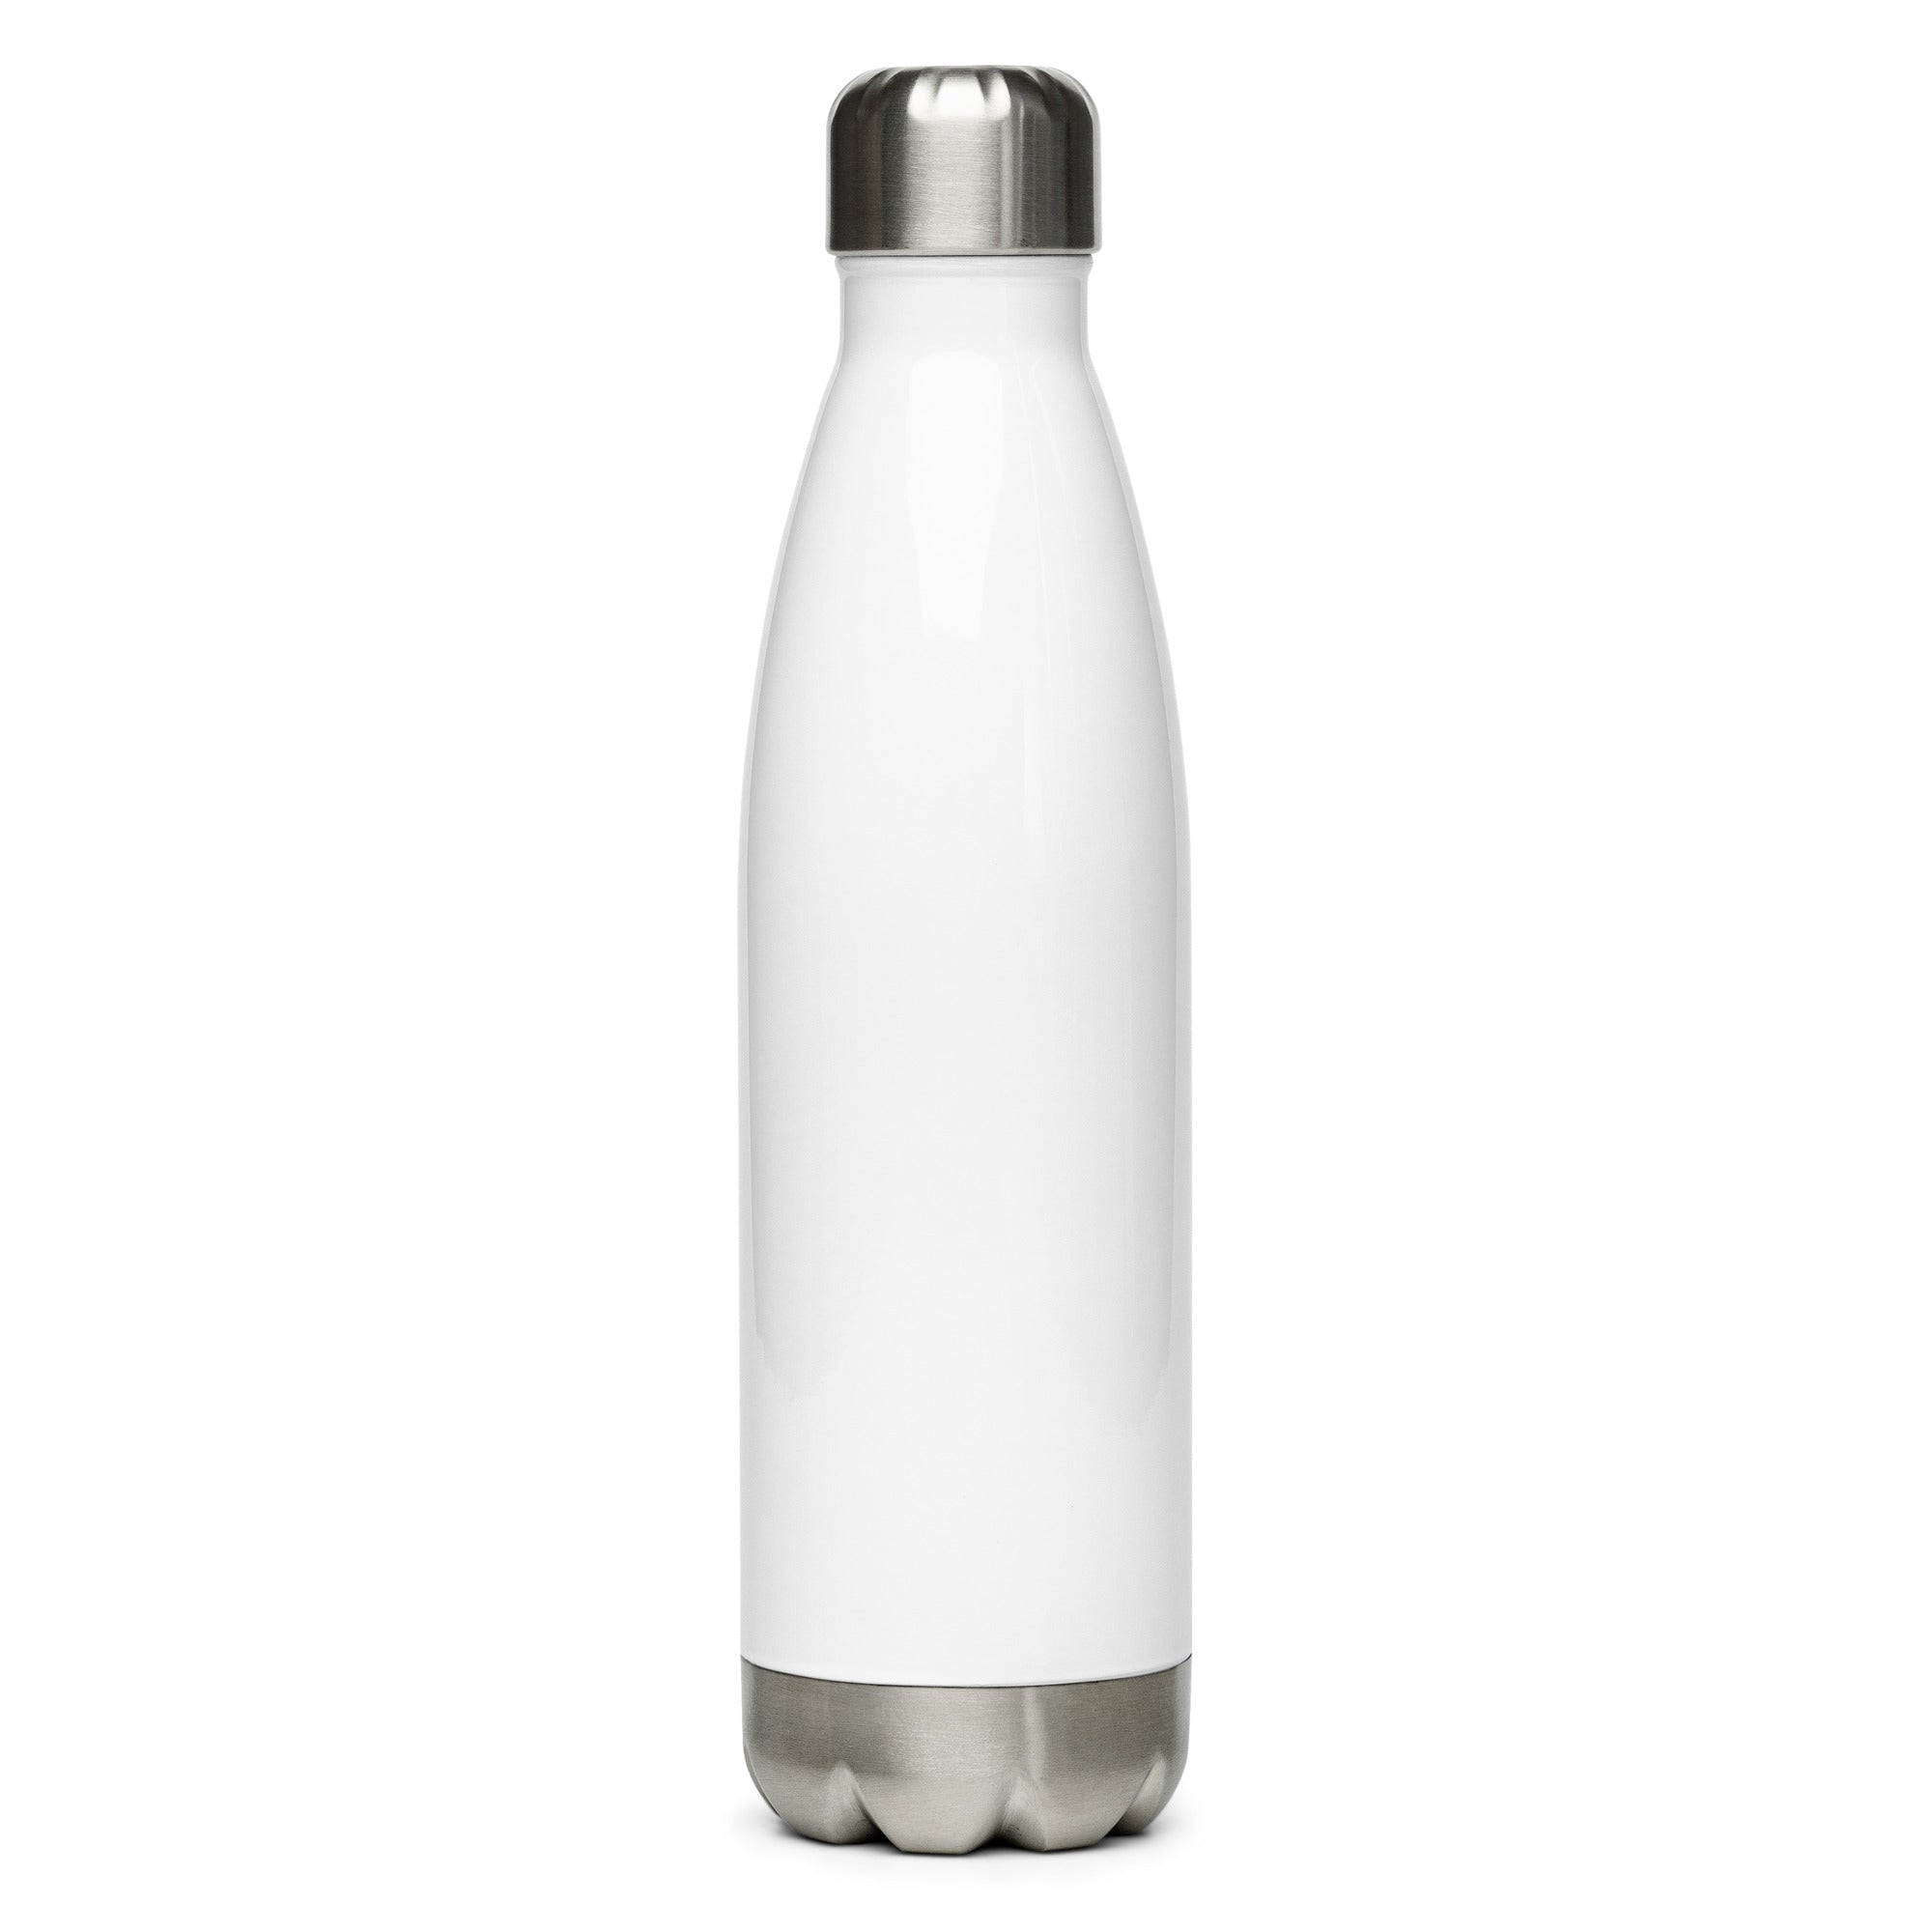 Stainless steel water bottle - Psalm 91